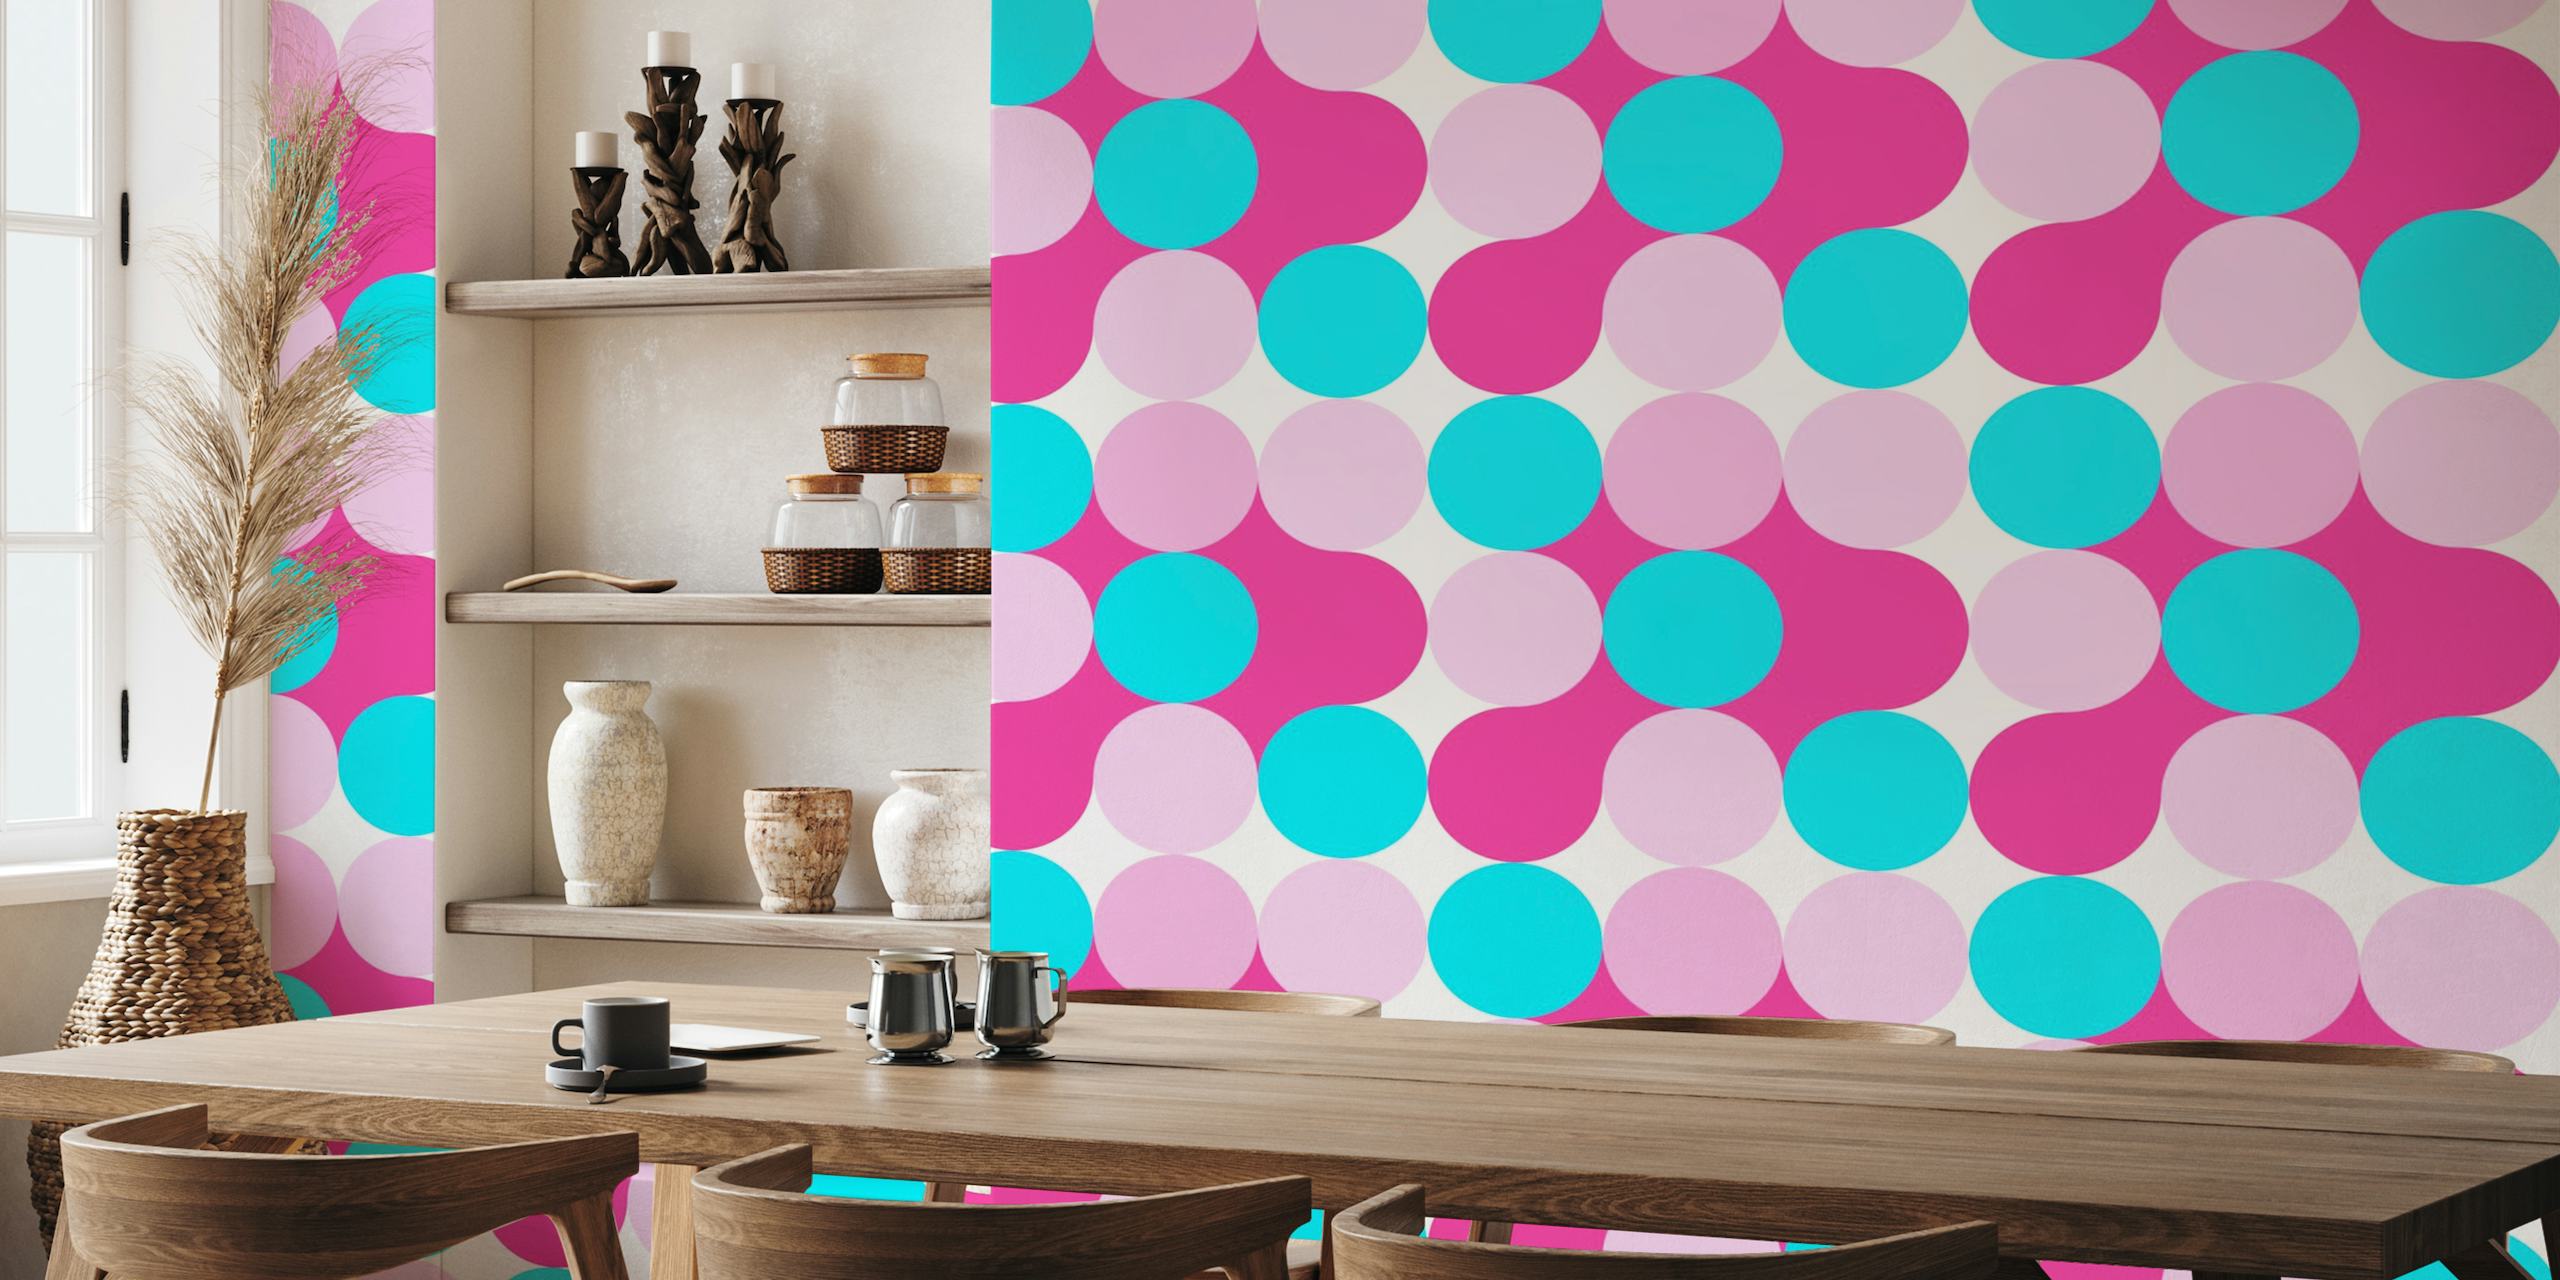 Retro Barbicore Pink and Aqua dot pattern papel pintado